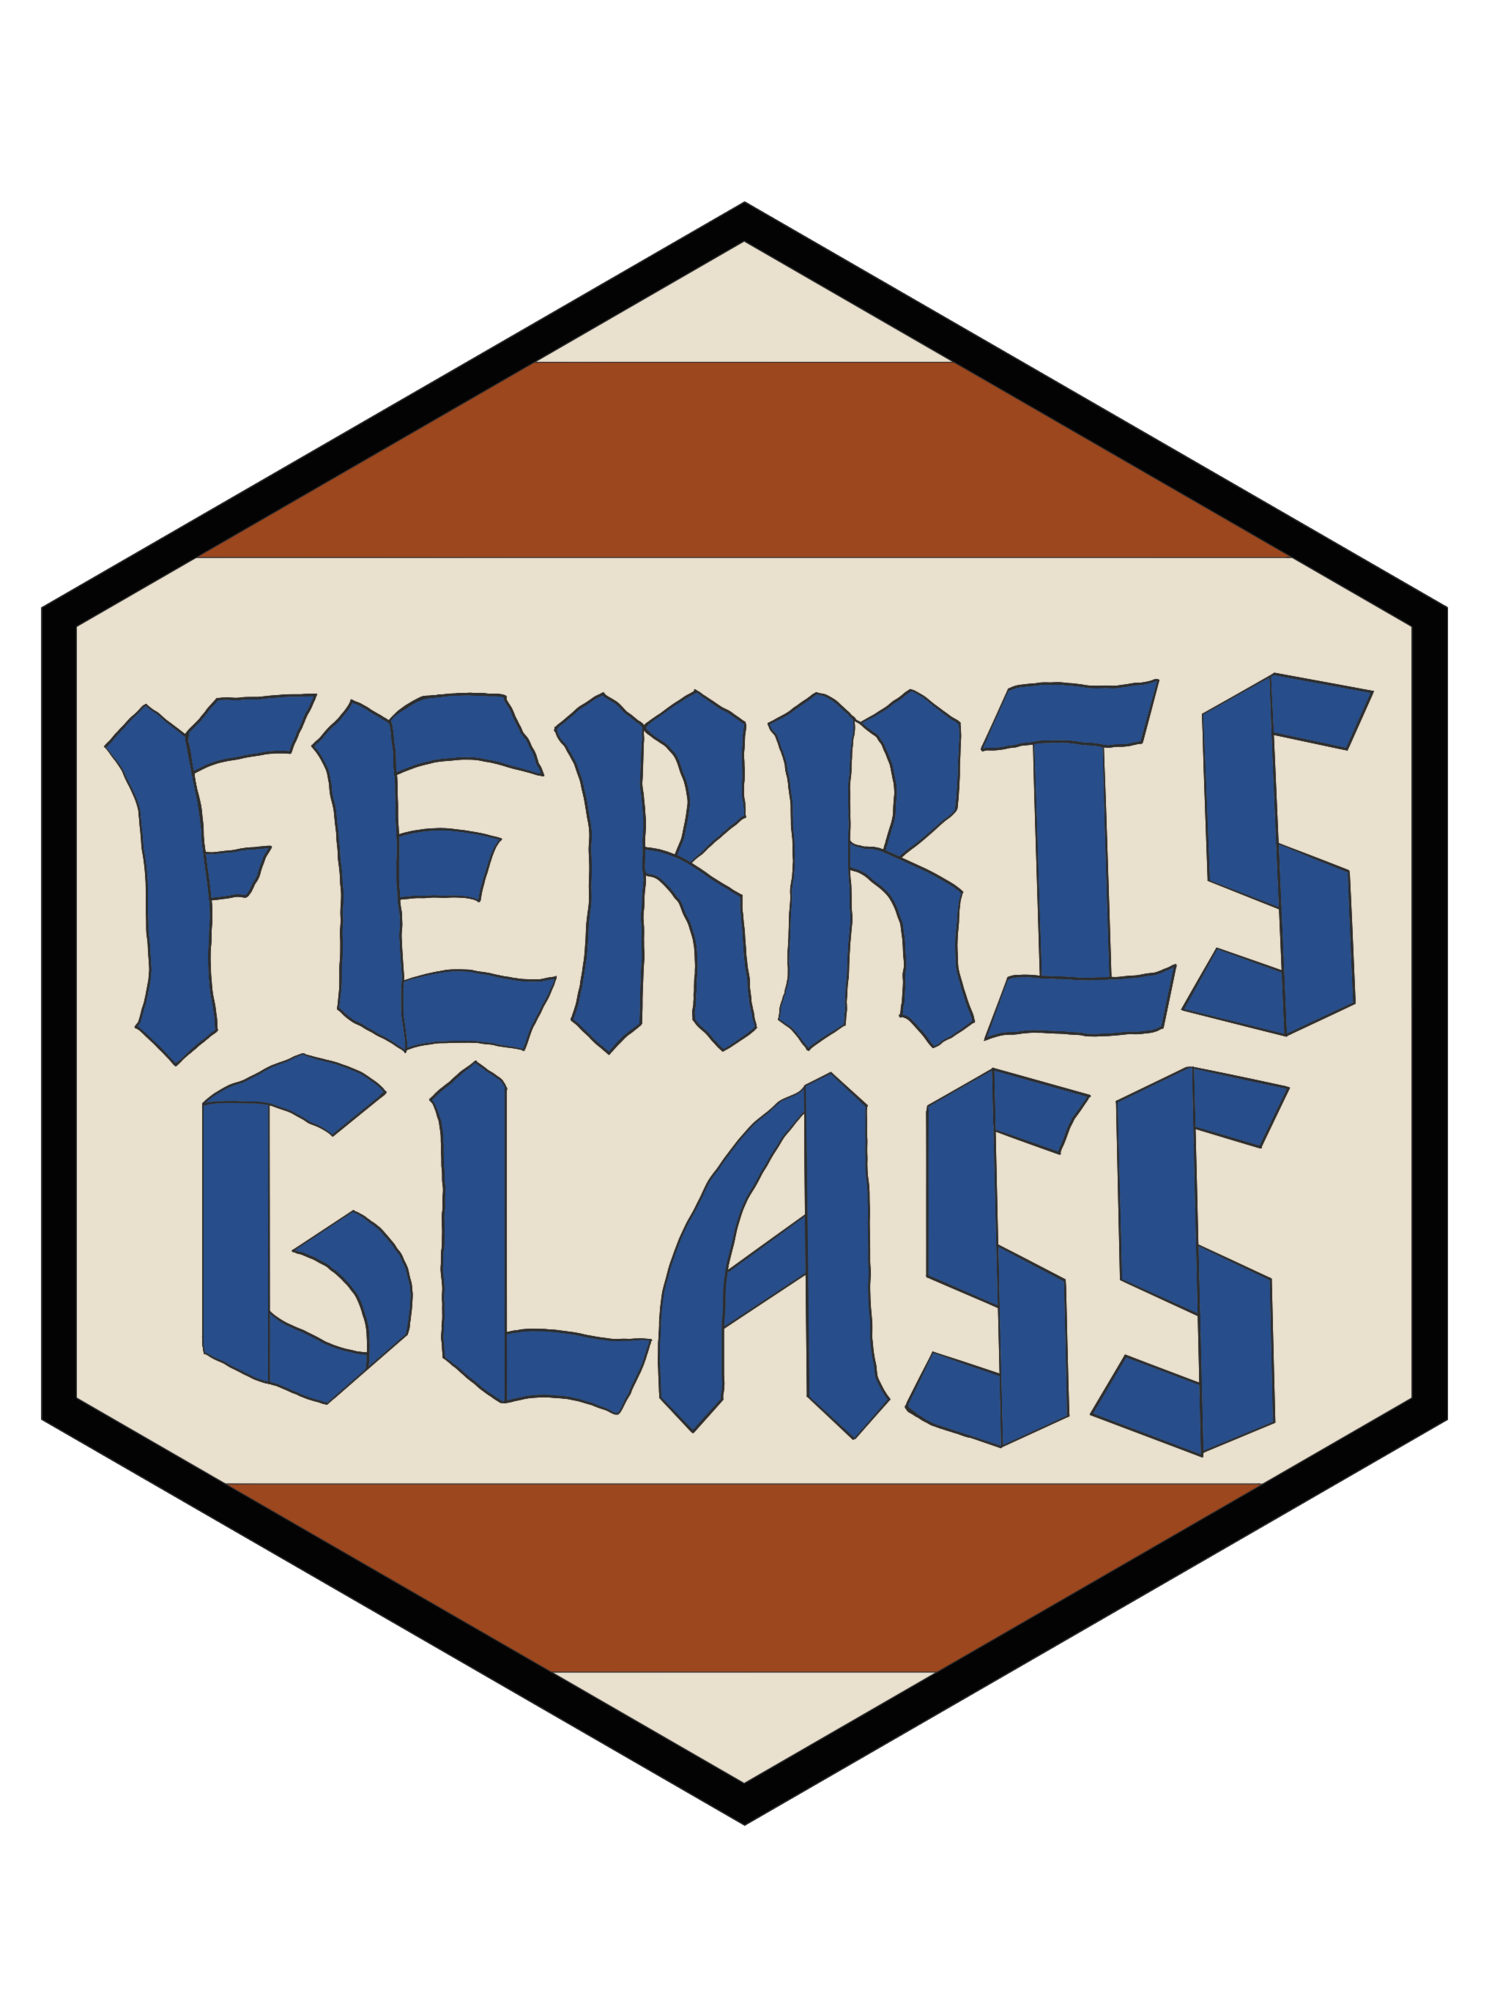 FERRIS GLASS